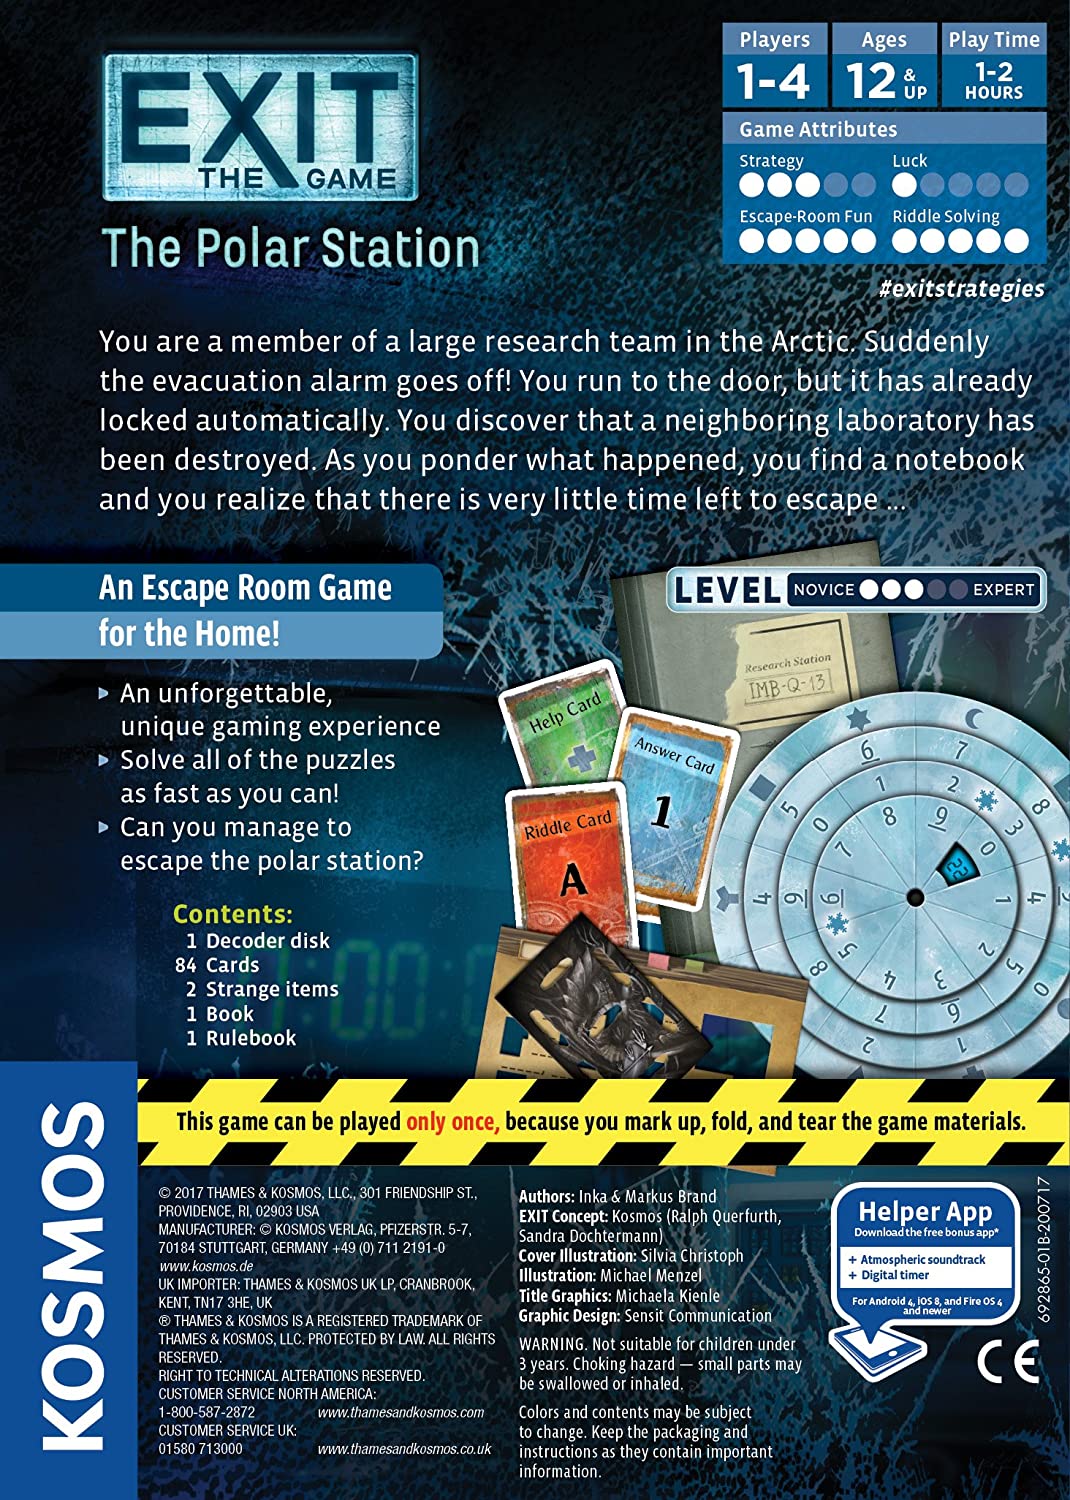 692865 Exit: The Polar Station 12+